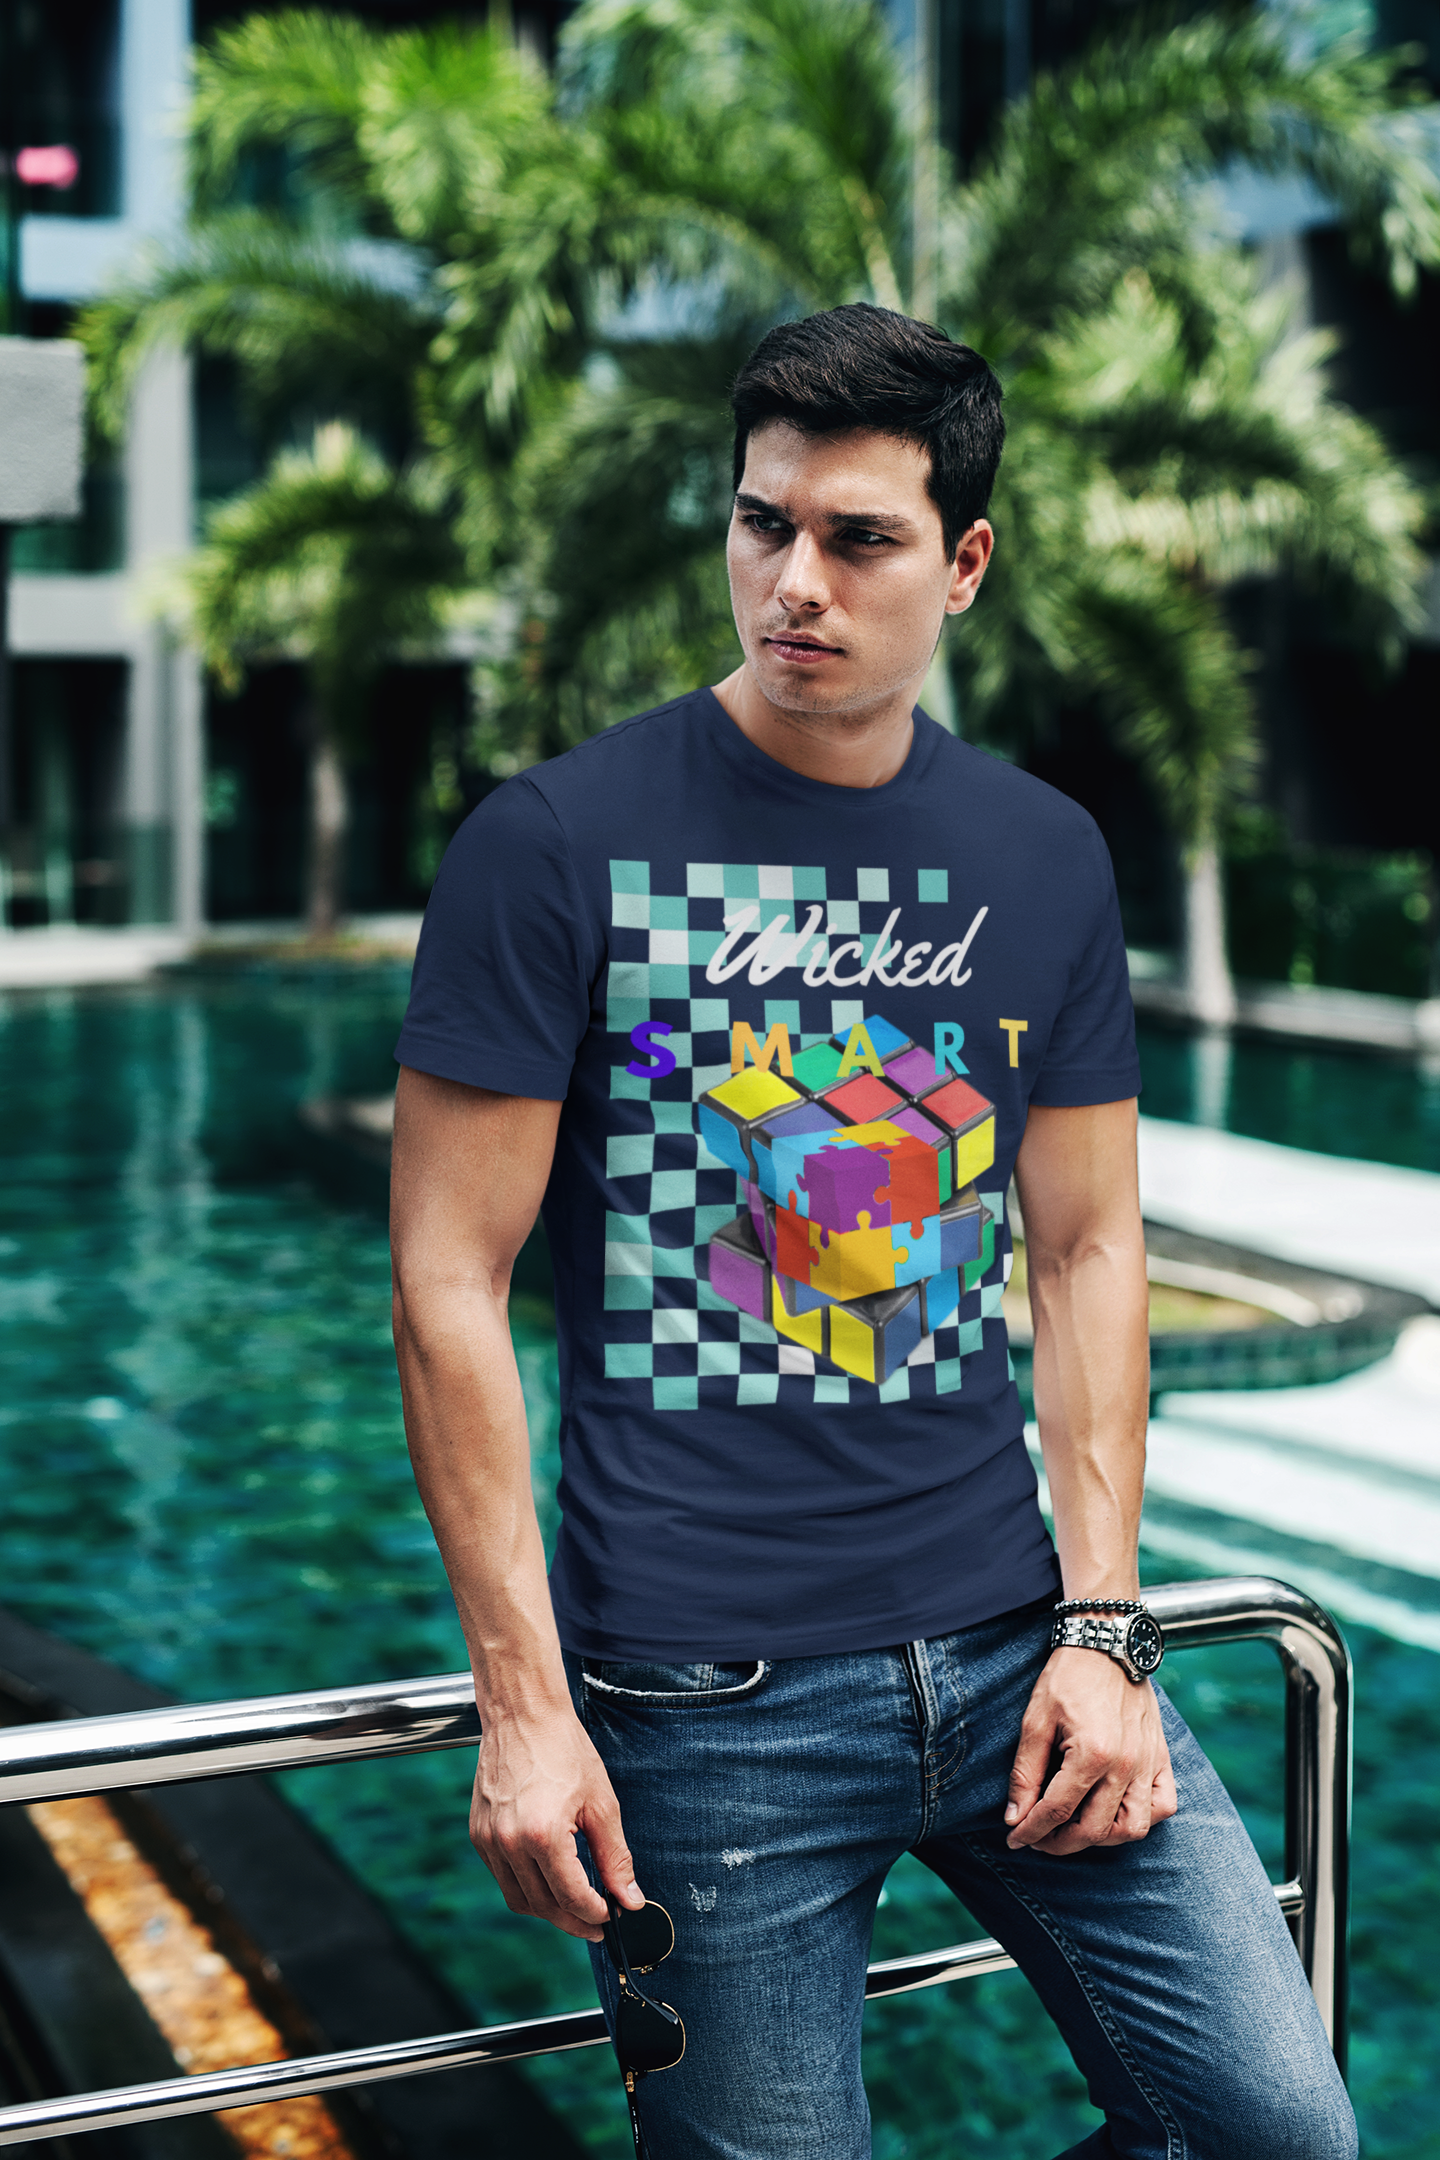 Wicked Smart 3-D Puzzle Cube camiseta unisex de manga corta Softstyle